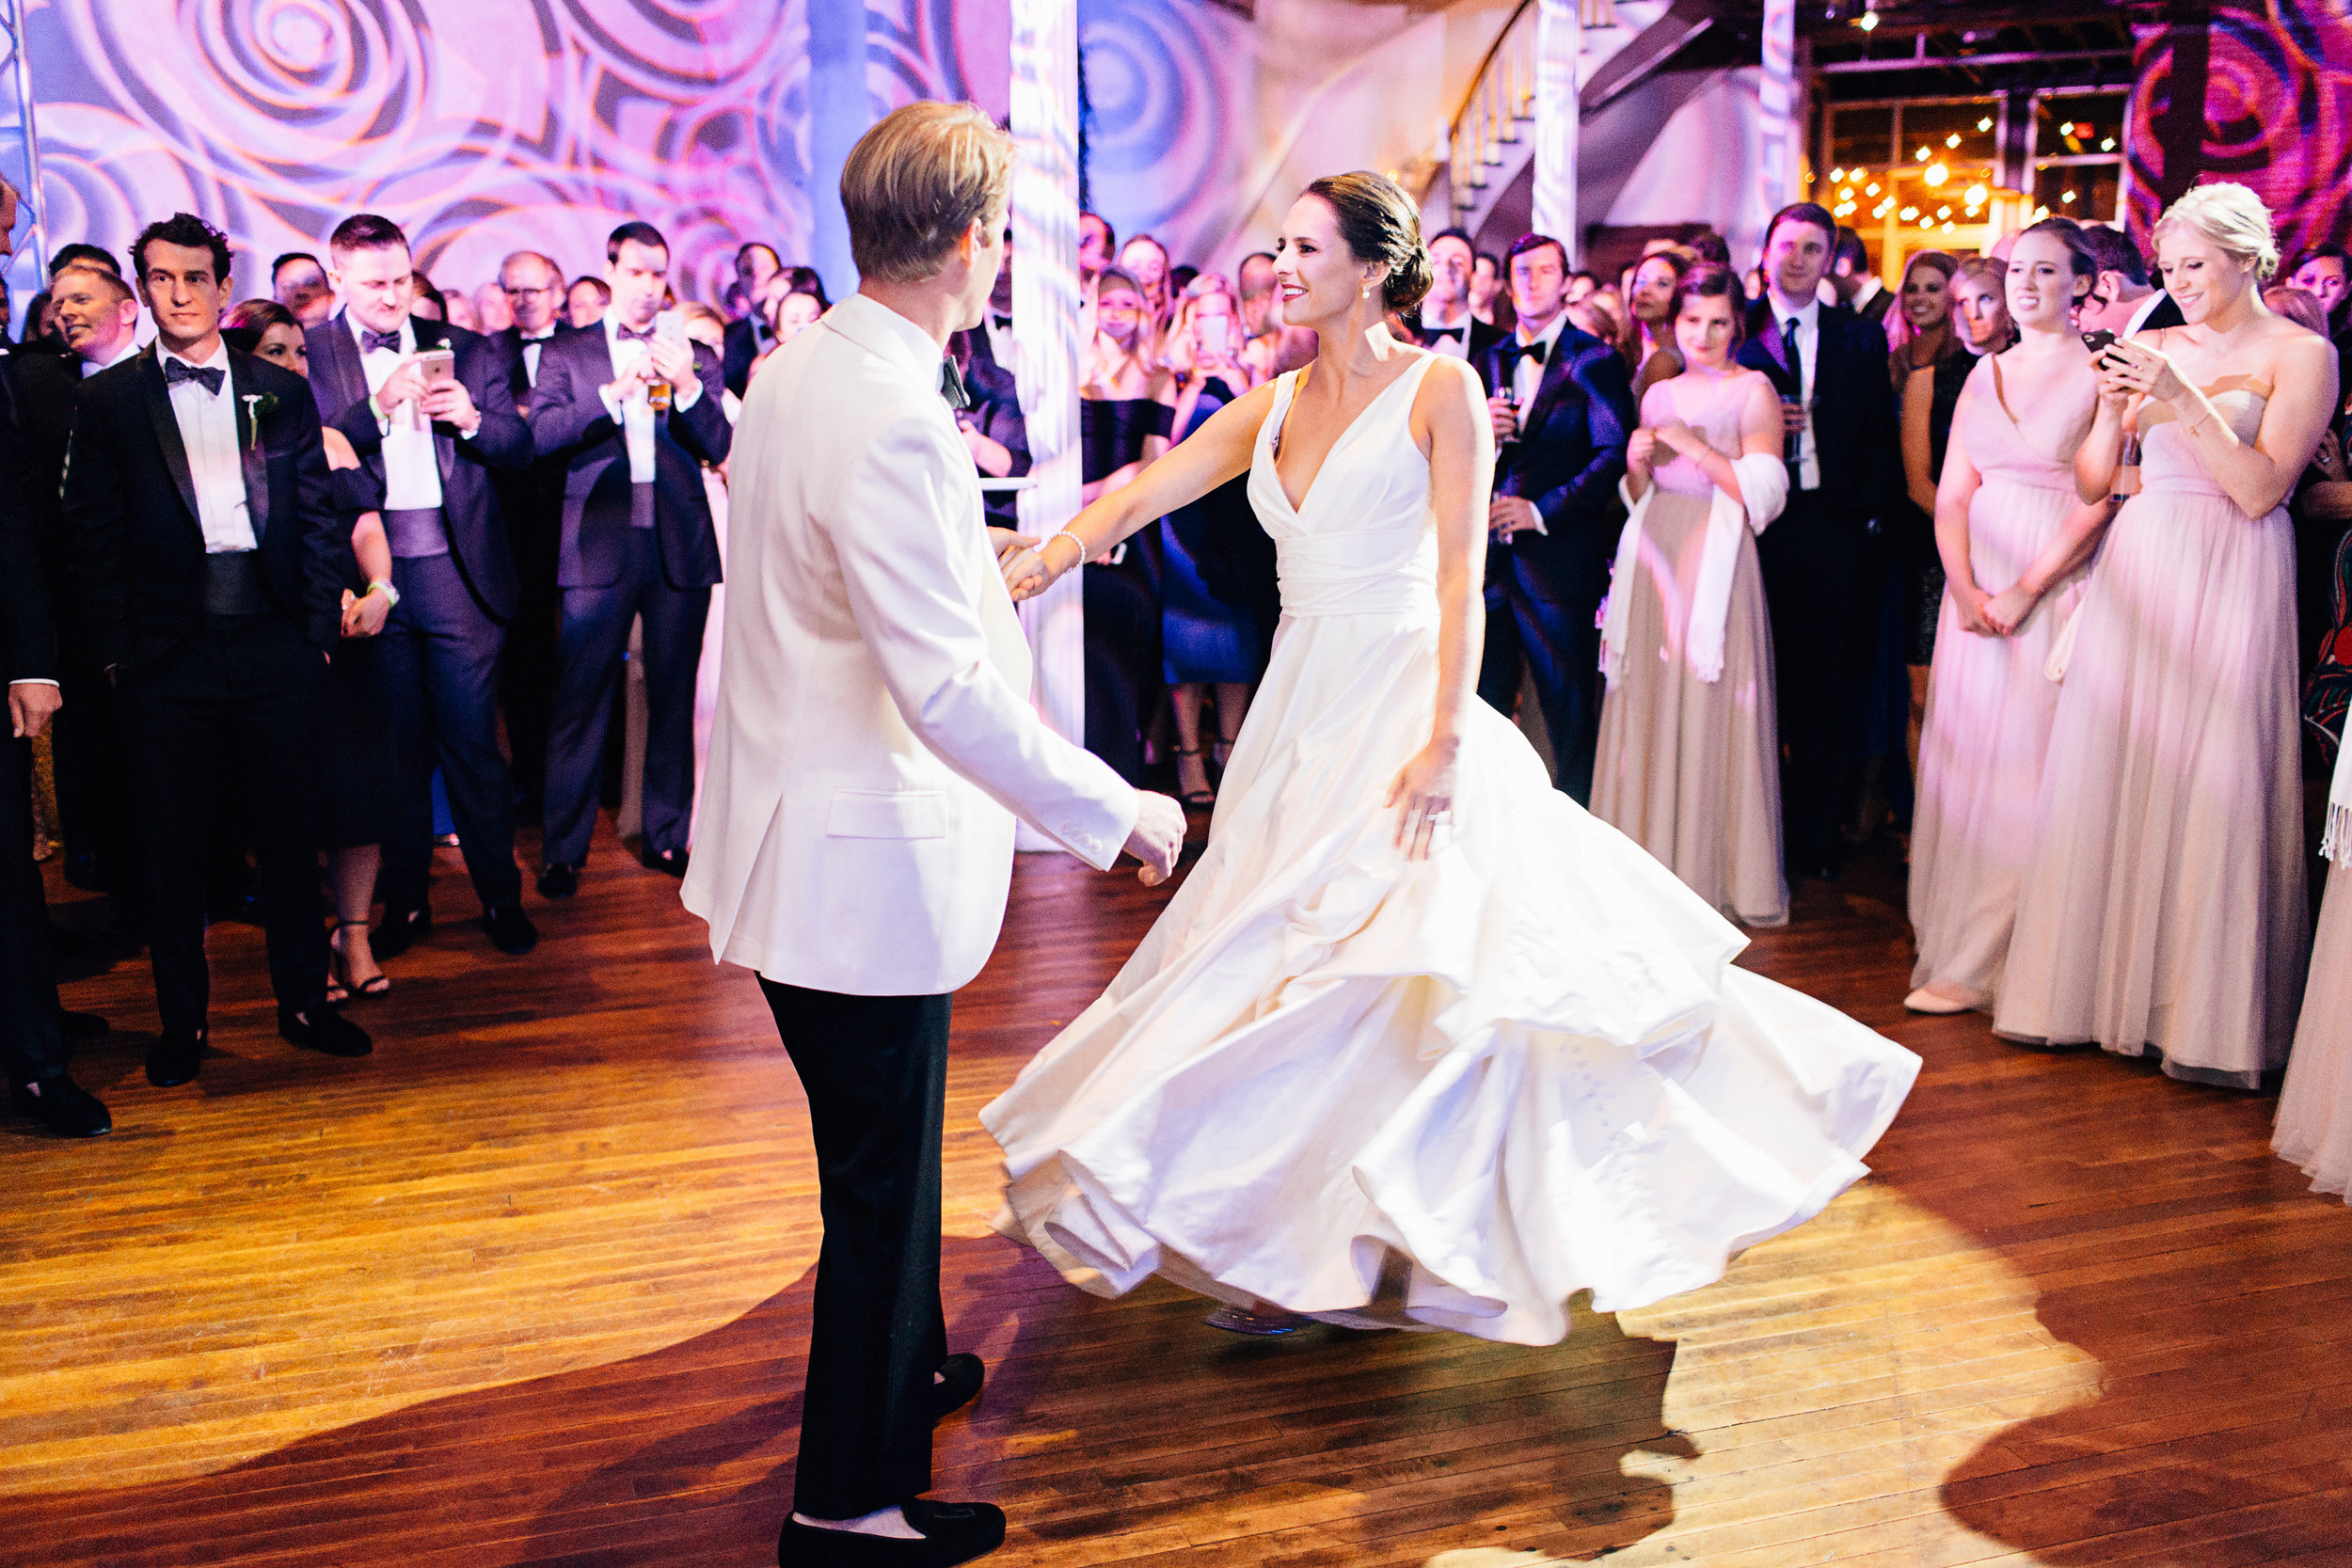 Groom twirling bride around colorful dance floor